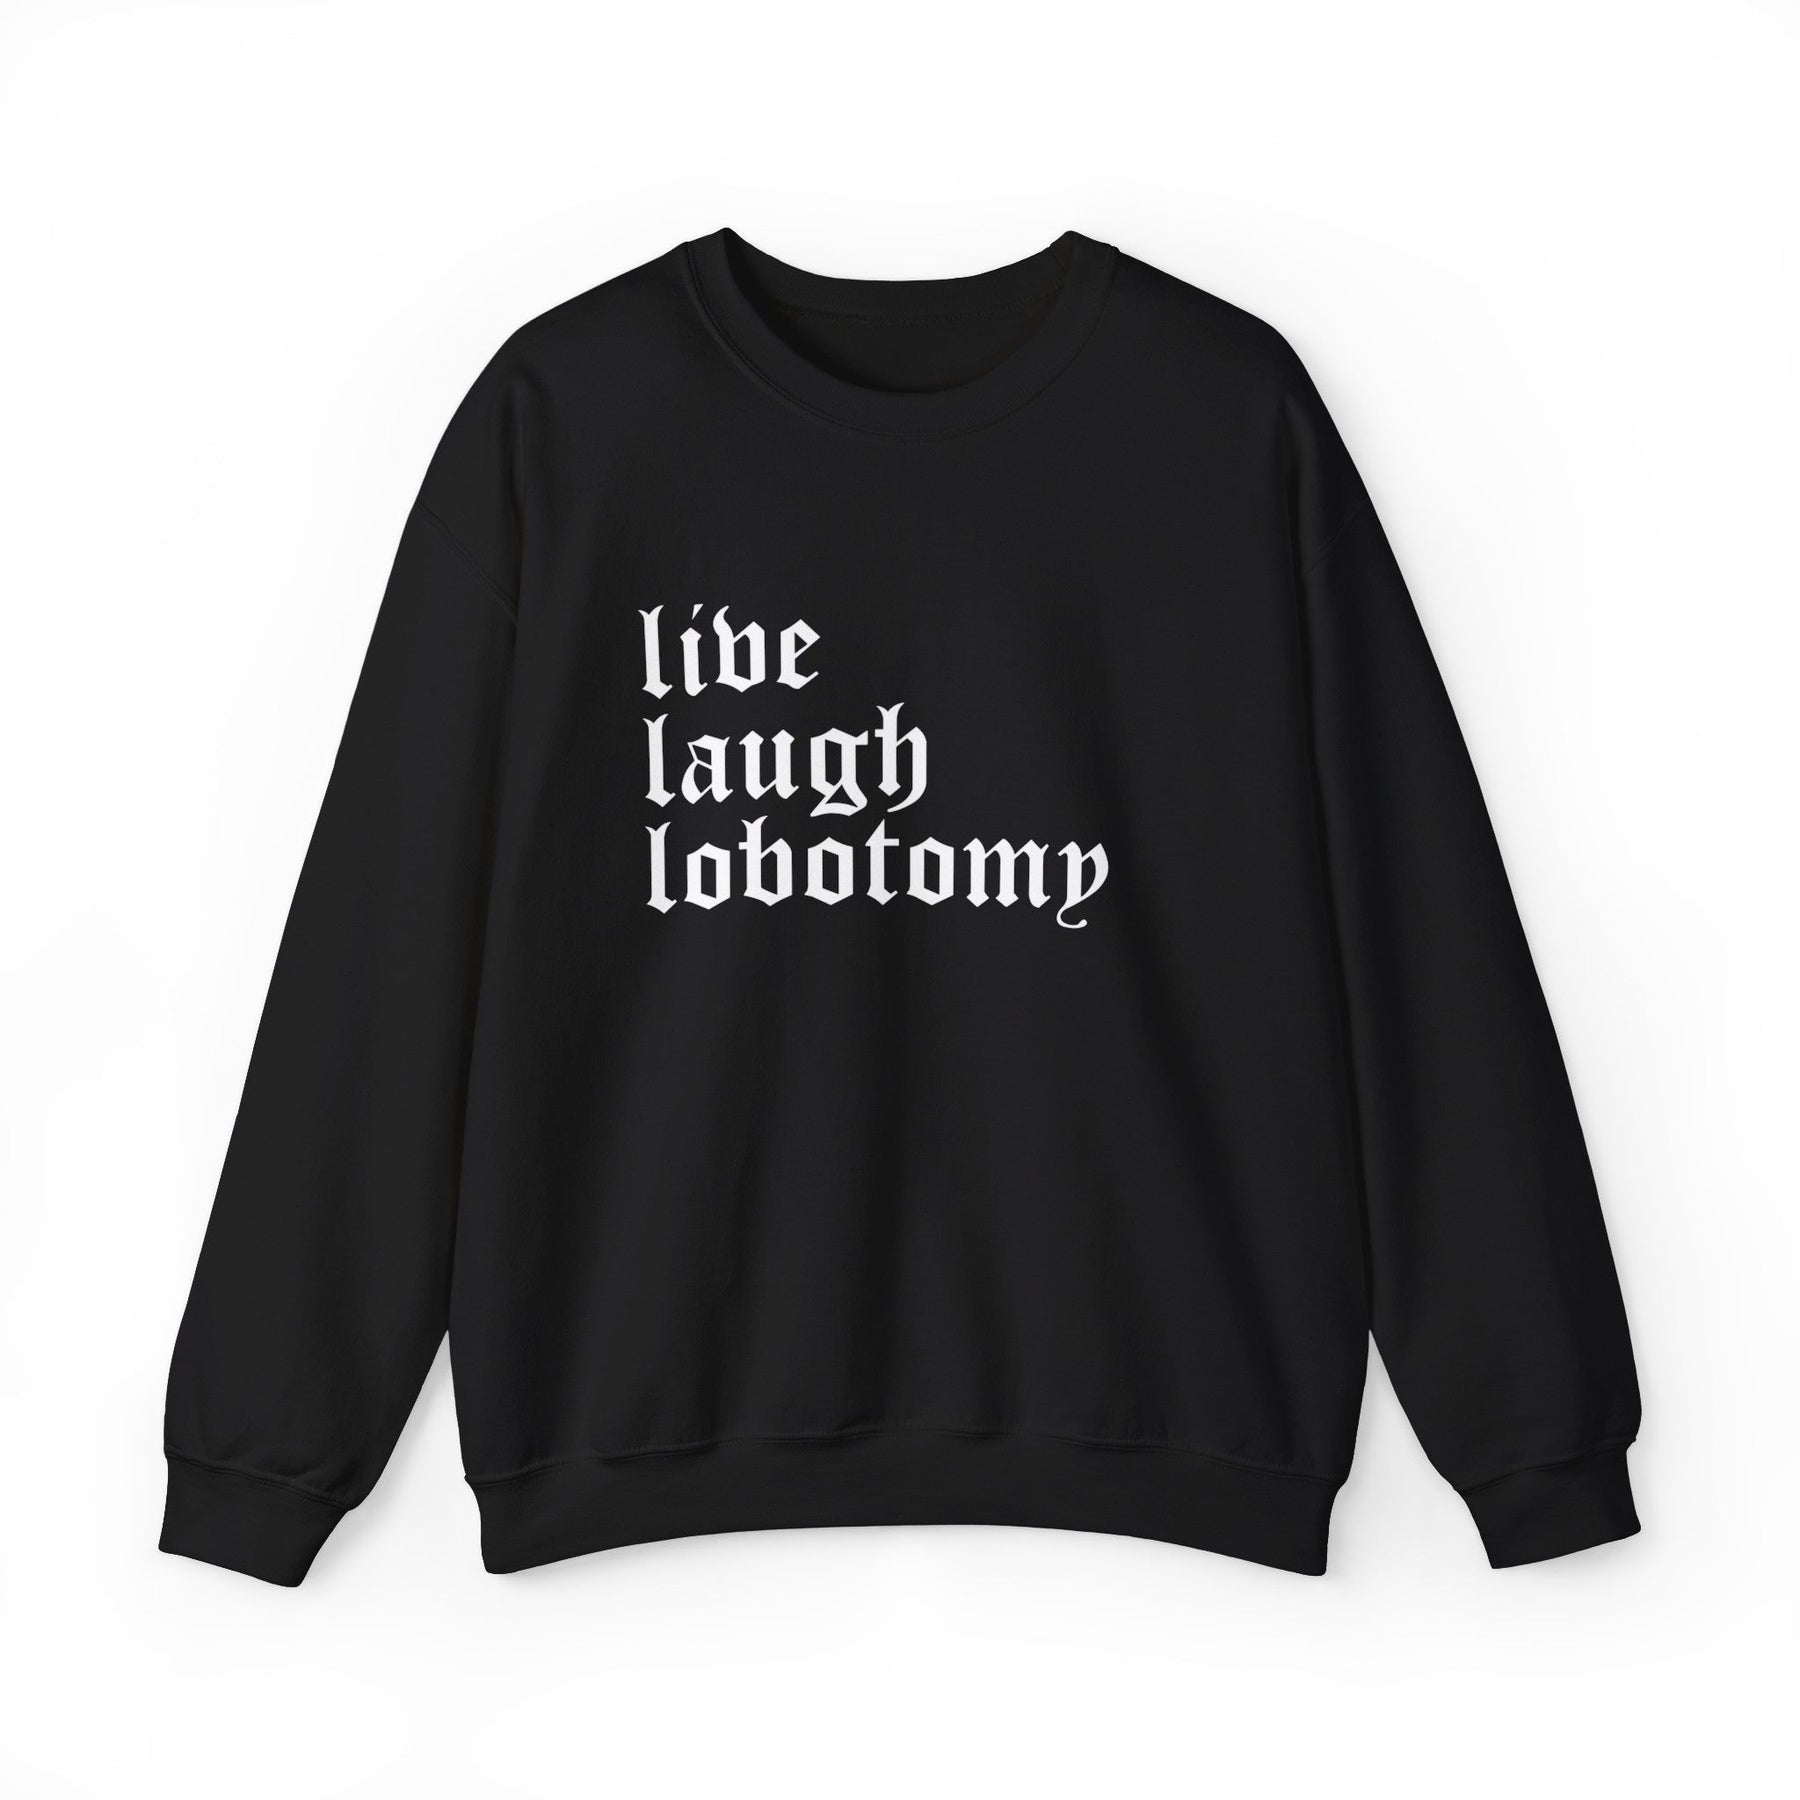 Live Laugh Lobotomy Gothic Crew Neck Sweatshirt - Goth Cloth Co.Sweatshirt31746197169920376732